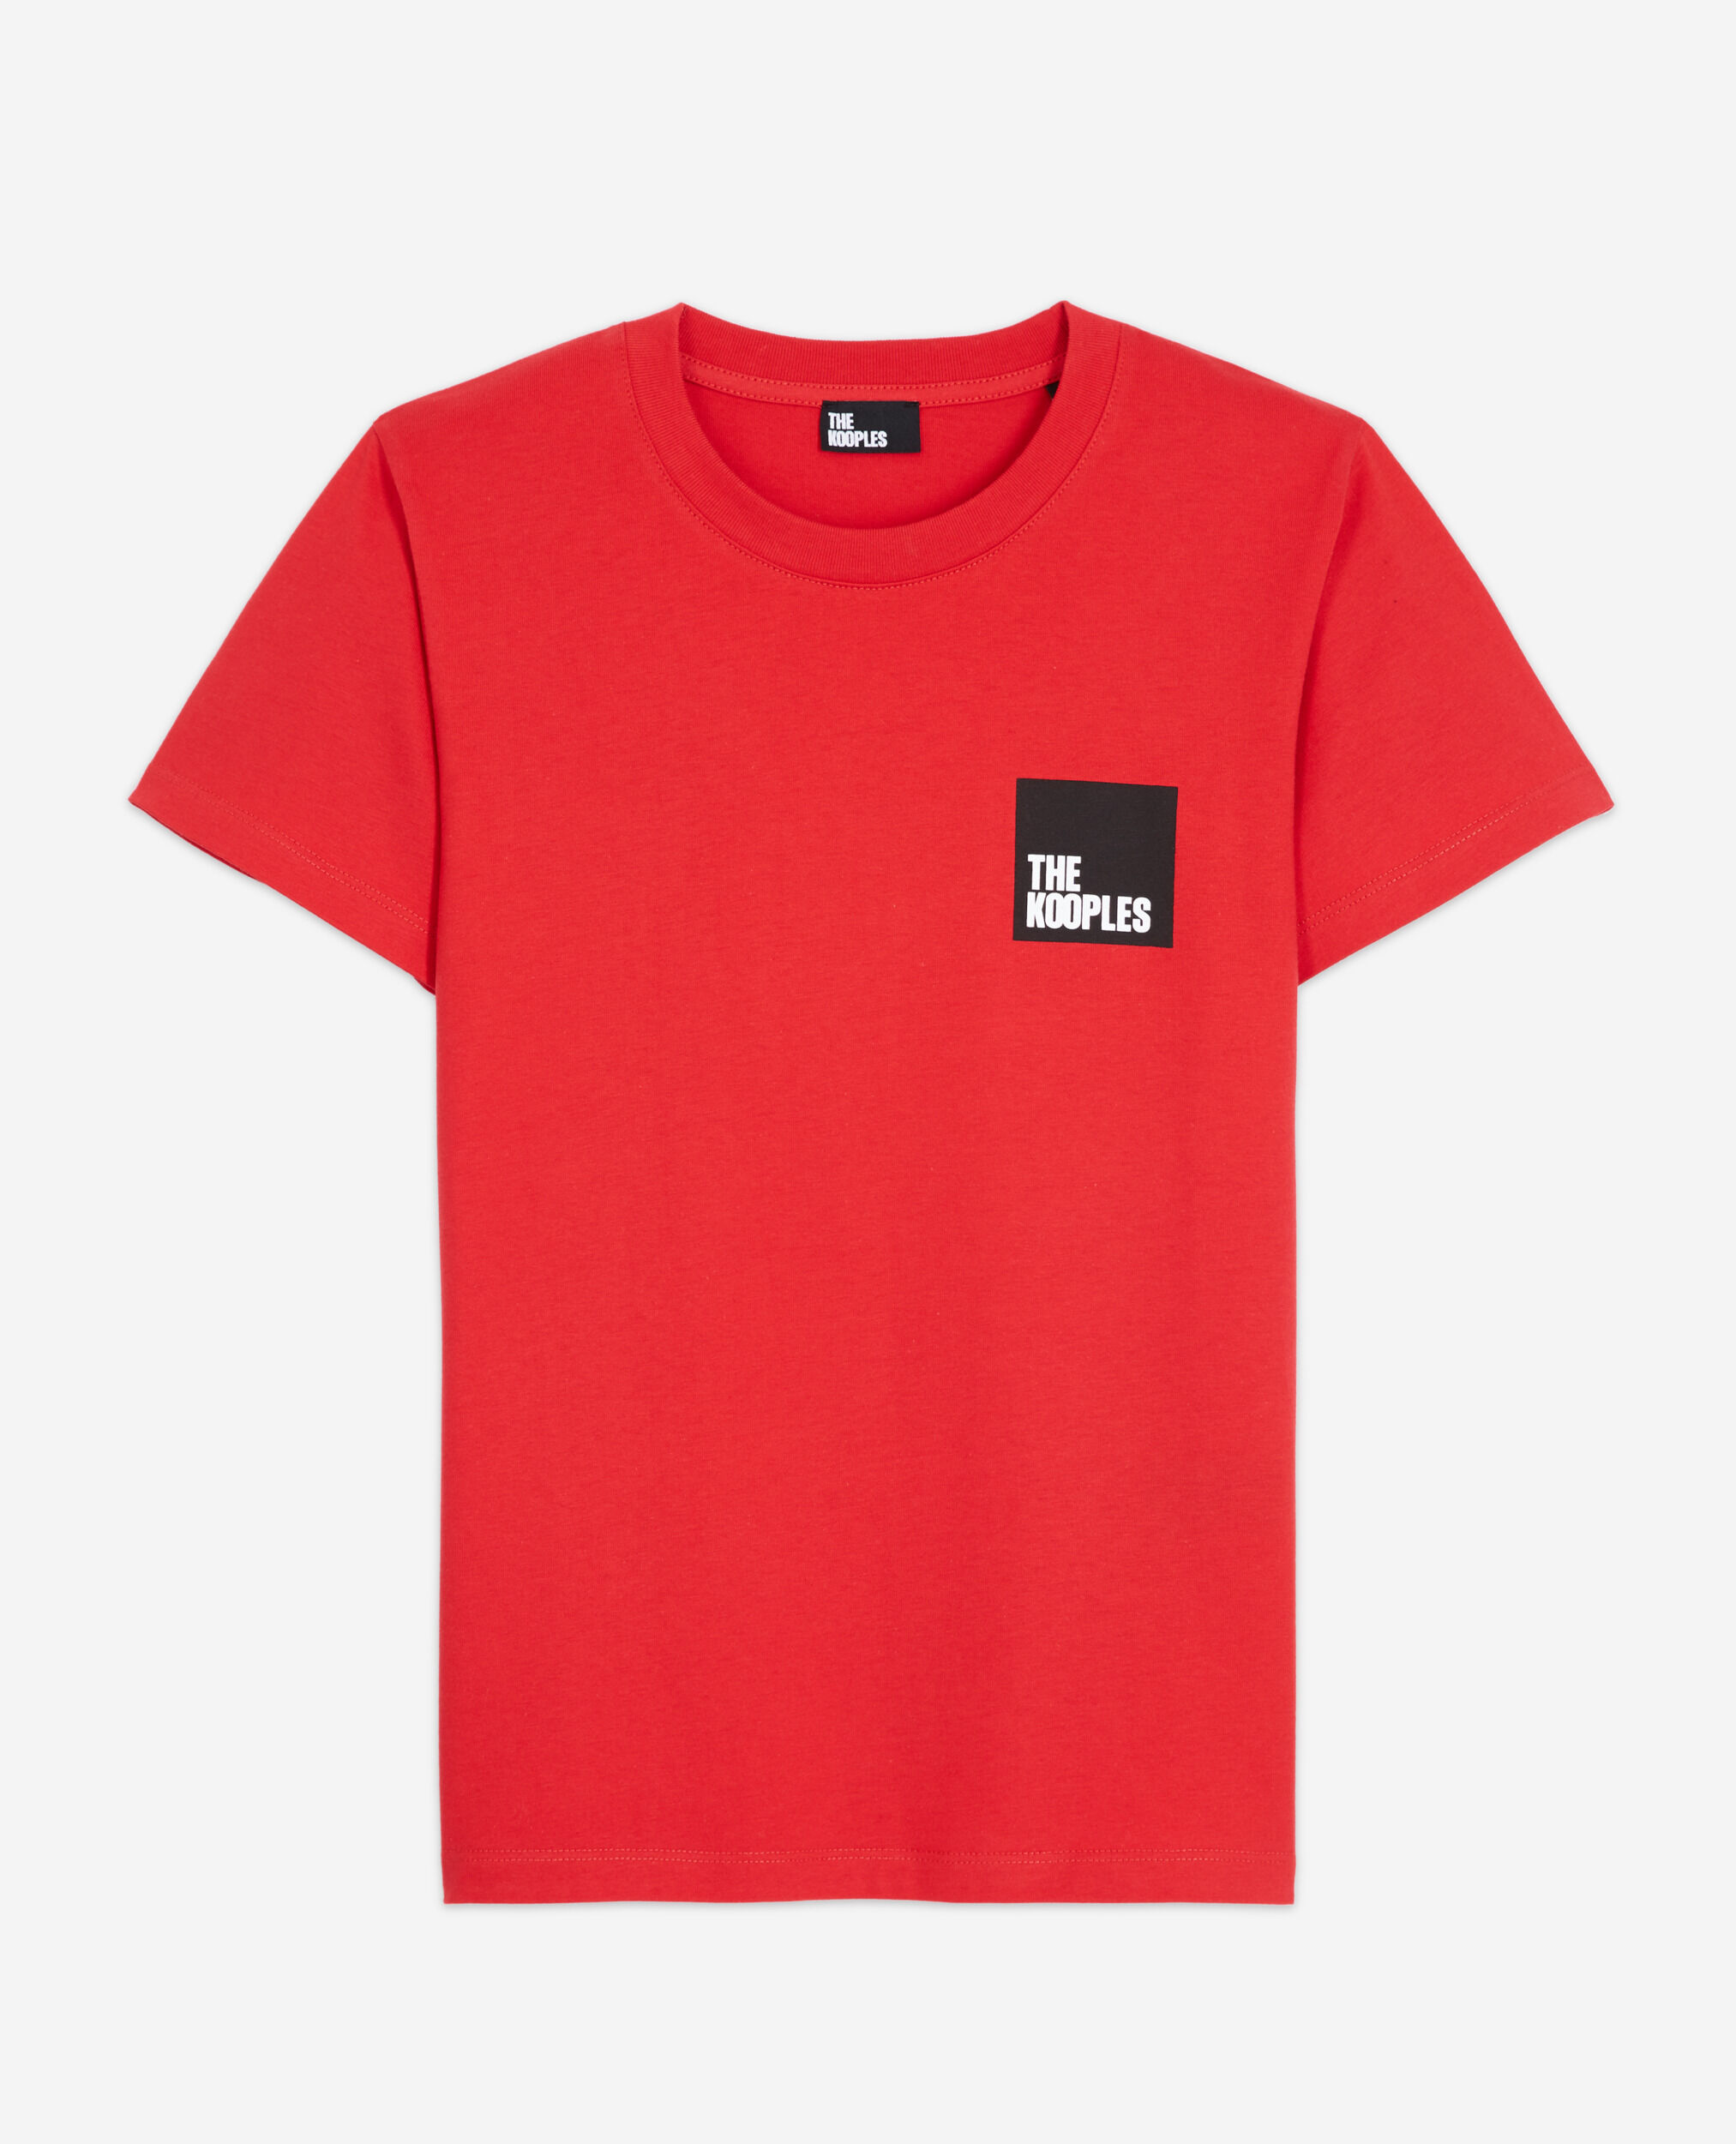 The Kooples DAMEN in Rot für Herren Damen Herren Bekleidung Herren T-Shirts Kurzarm T-Shirts 